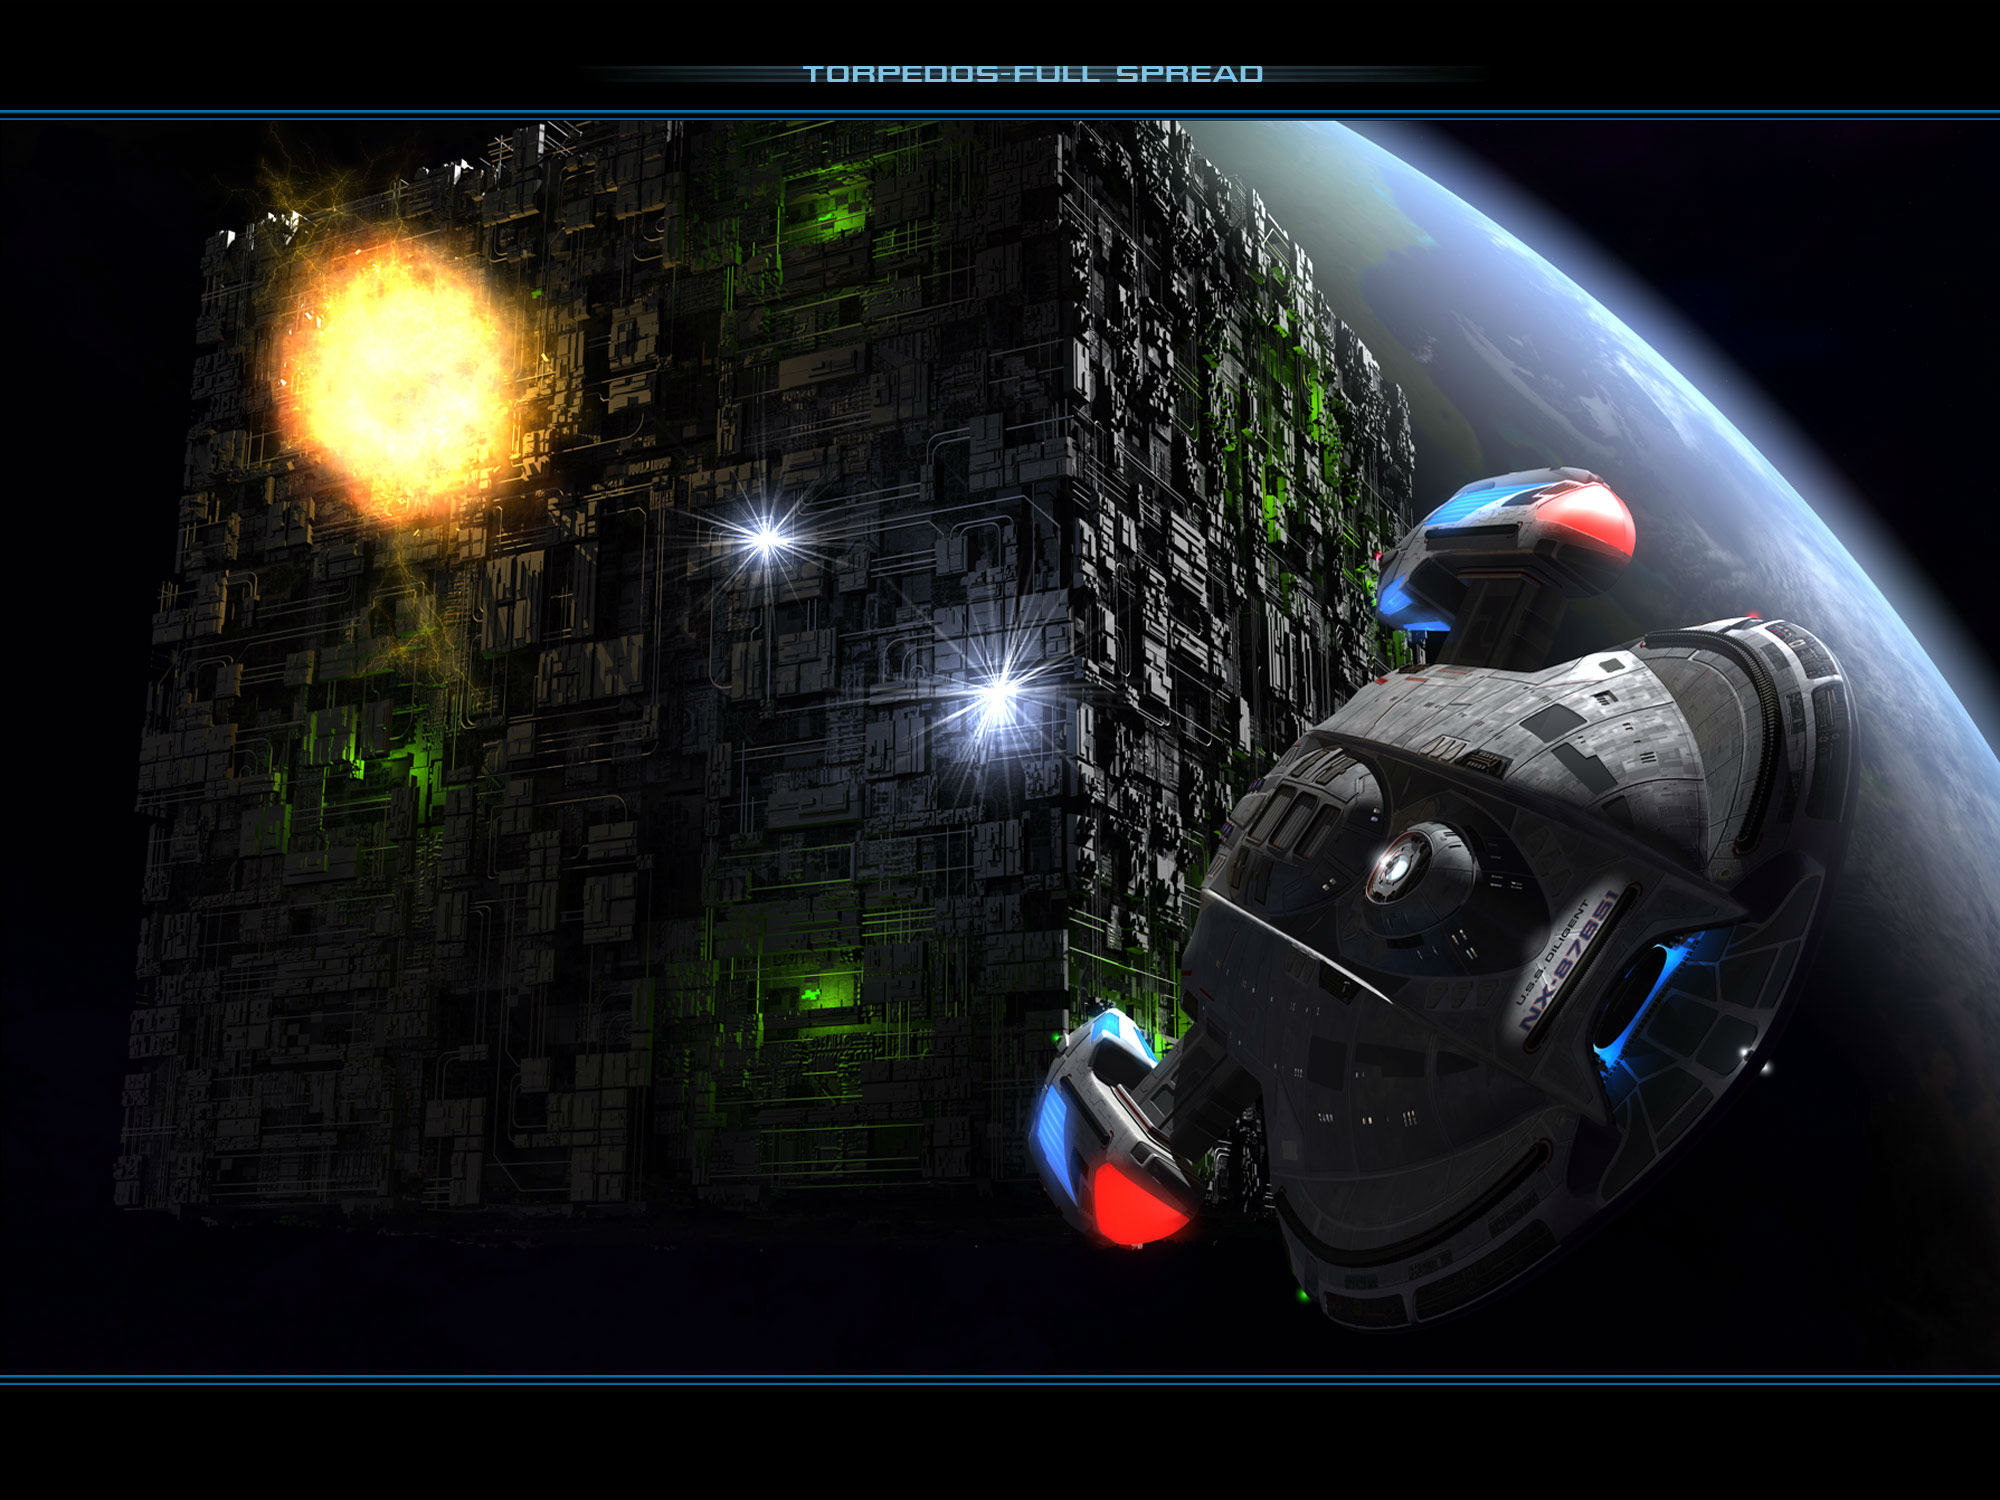 B Sci Fi Movies Video Games Battle Spacecraft Wallpaper Background